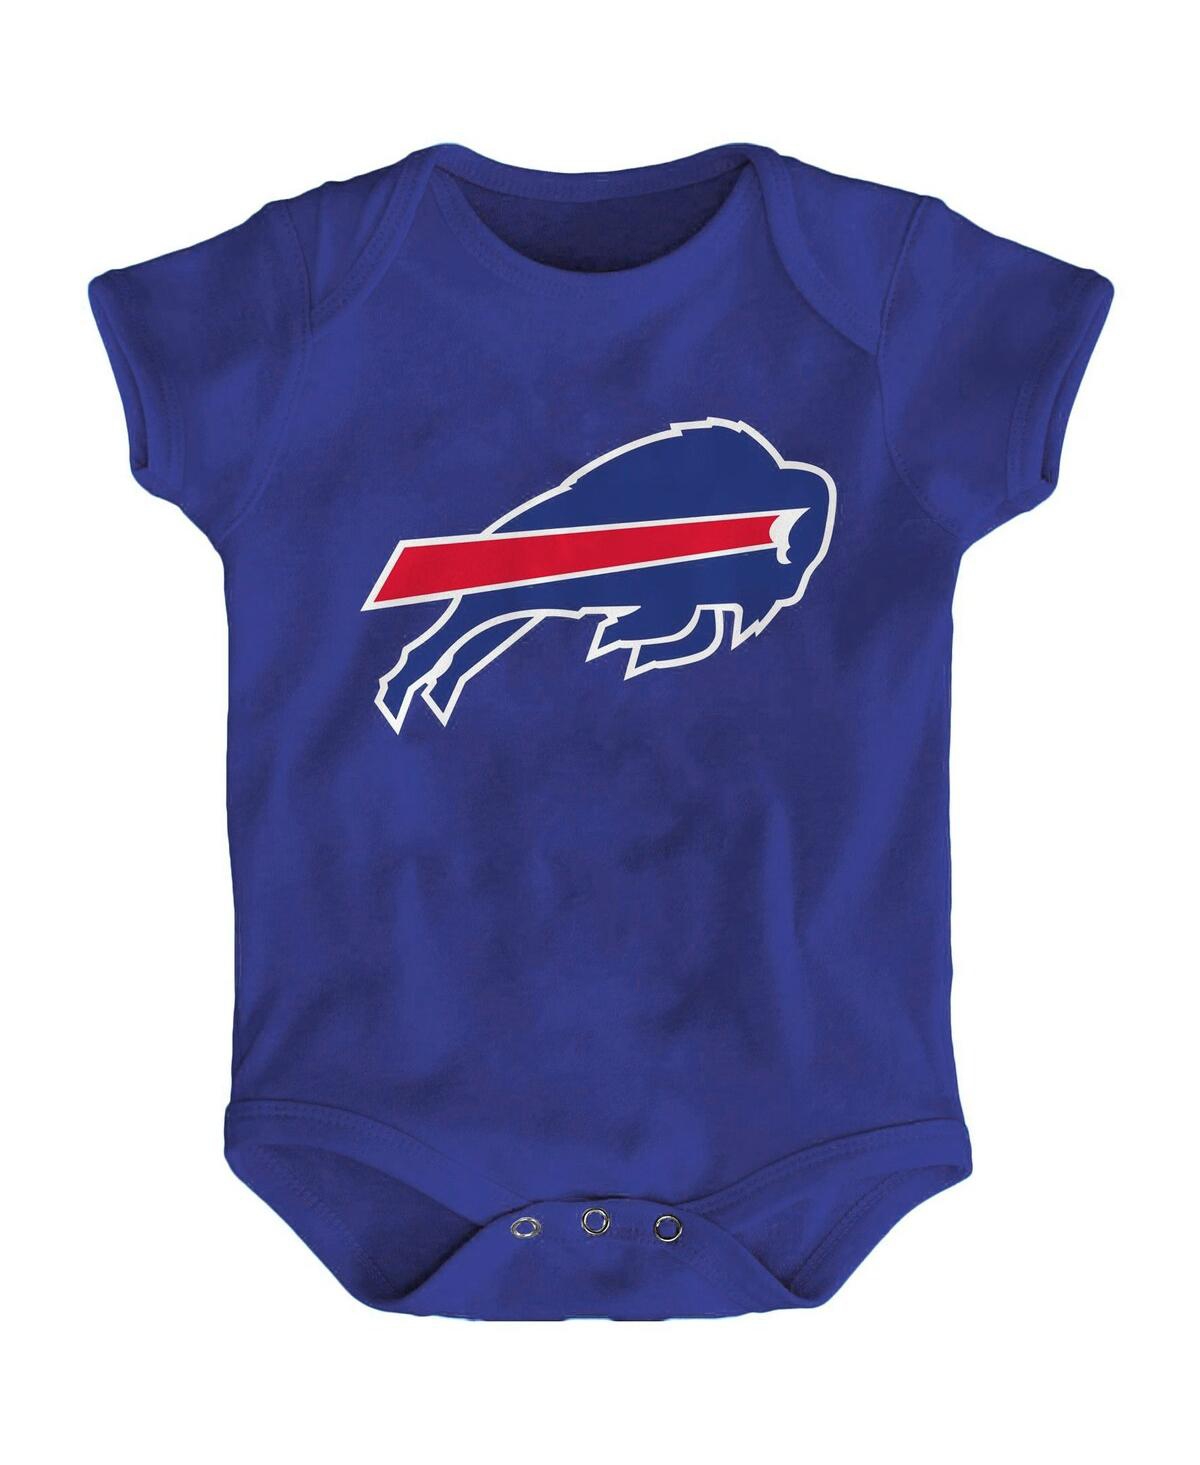 Outerstuff Babies' Newborn Boys And Girls Royal Buffalo Bills Team Logo Bodysuit